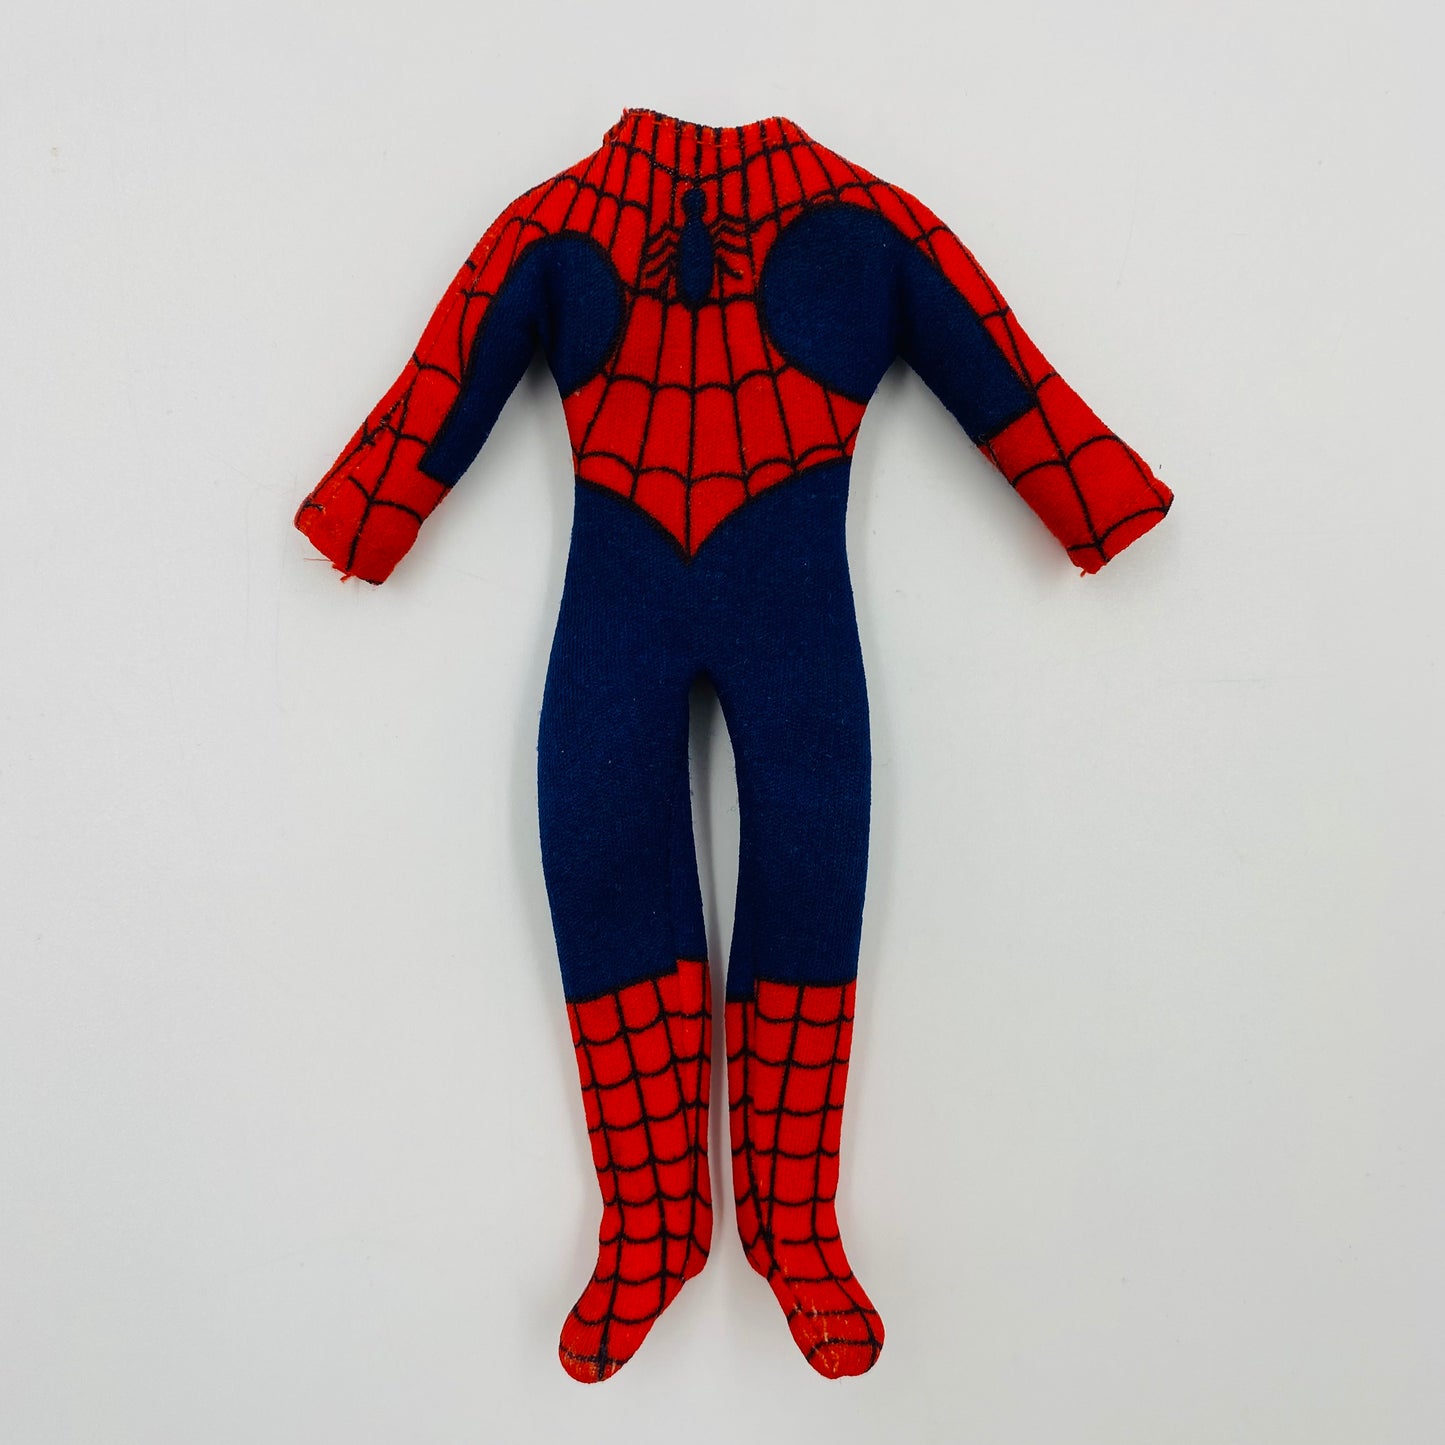 World’s Greatest Super Heroes! Spider-Man loose 8” action figure (1974) Mego